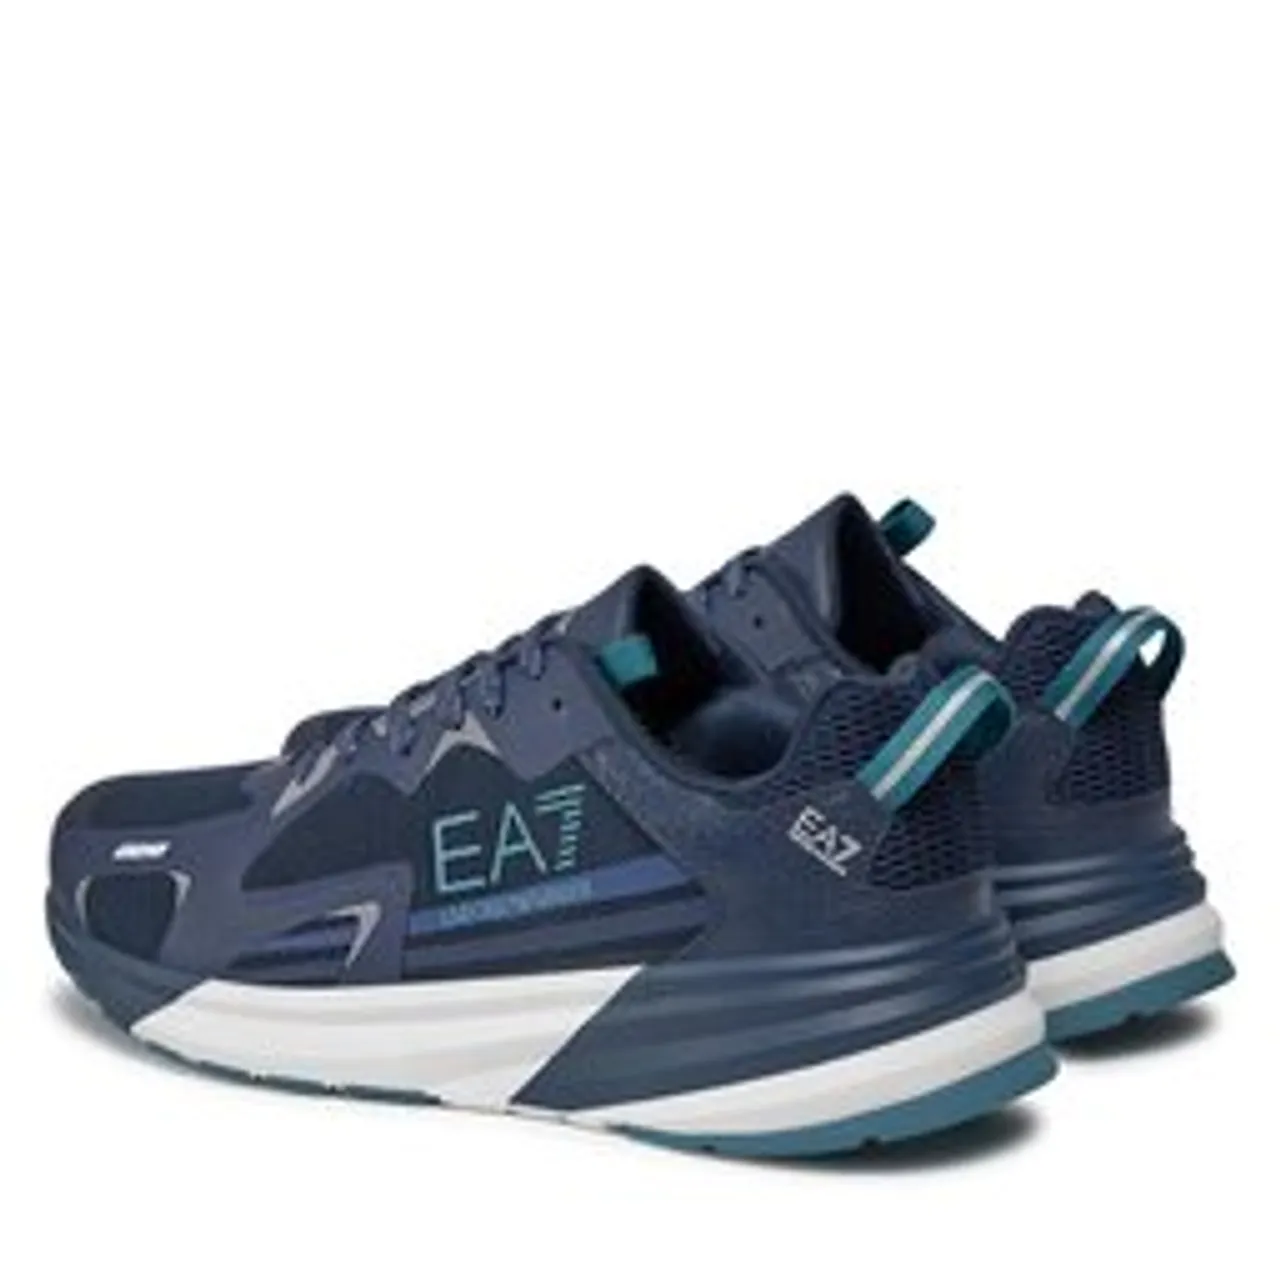 Sneakers EA7 Emporio Armani X8X156 XK360 S981 Blu Navy/Hydro